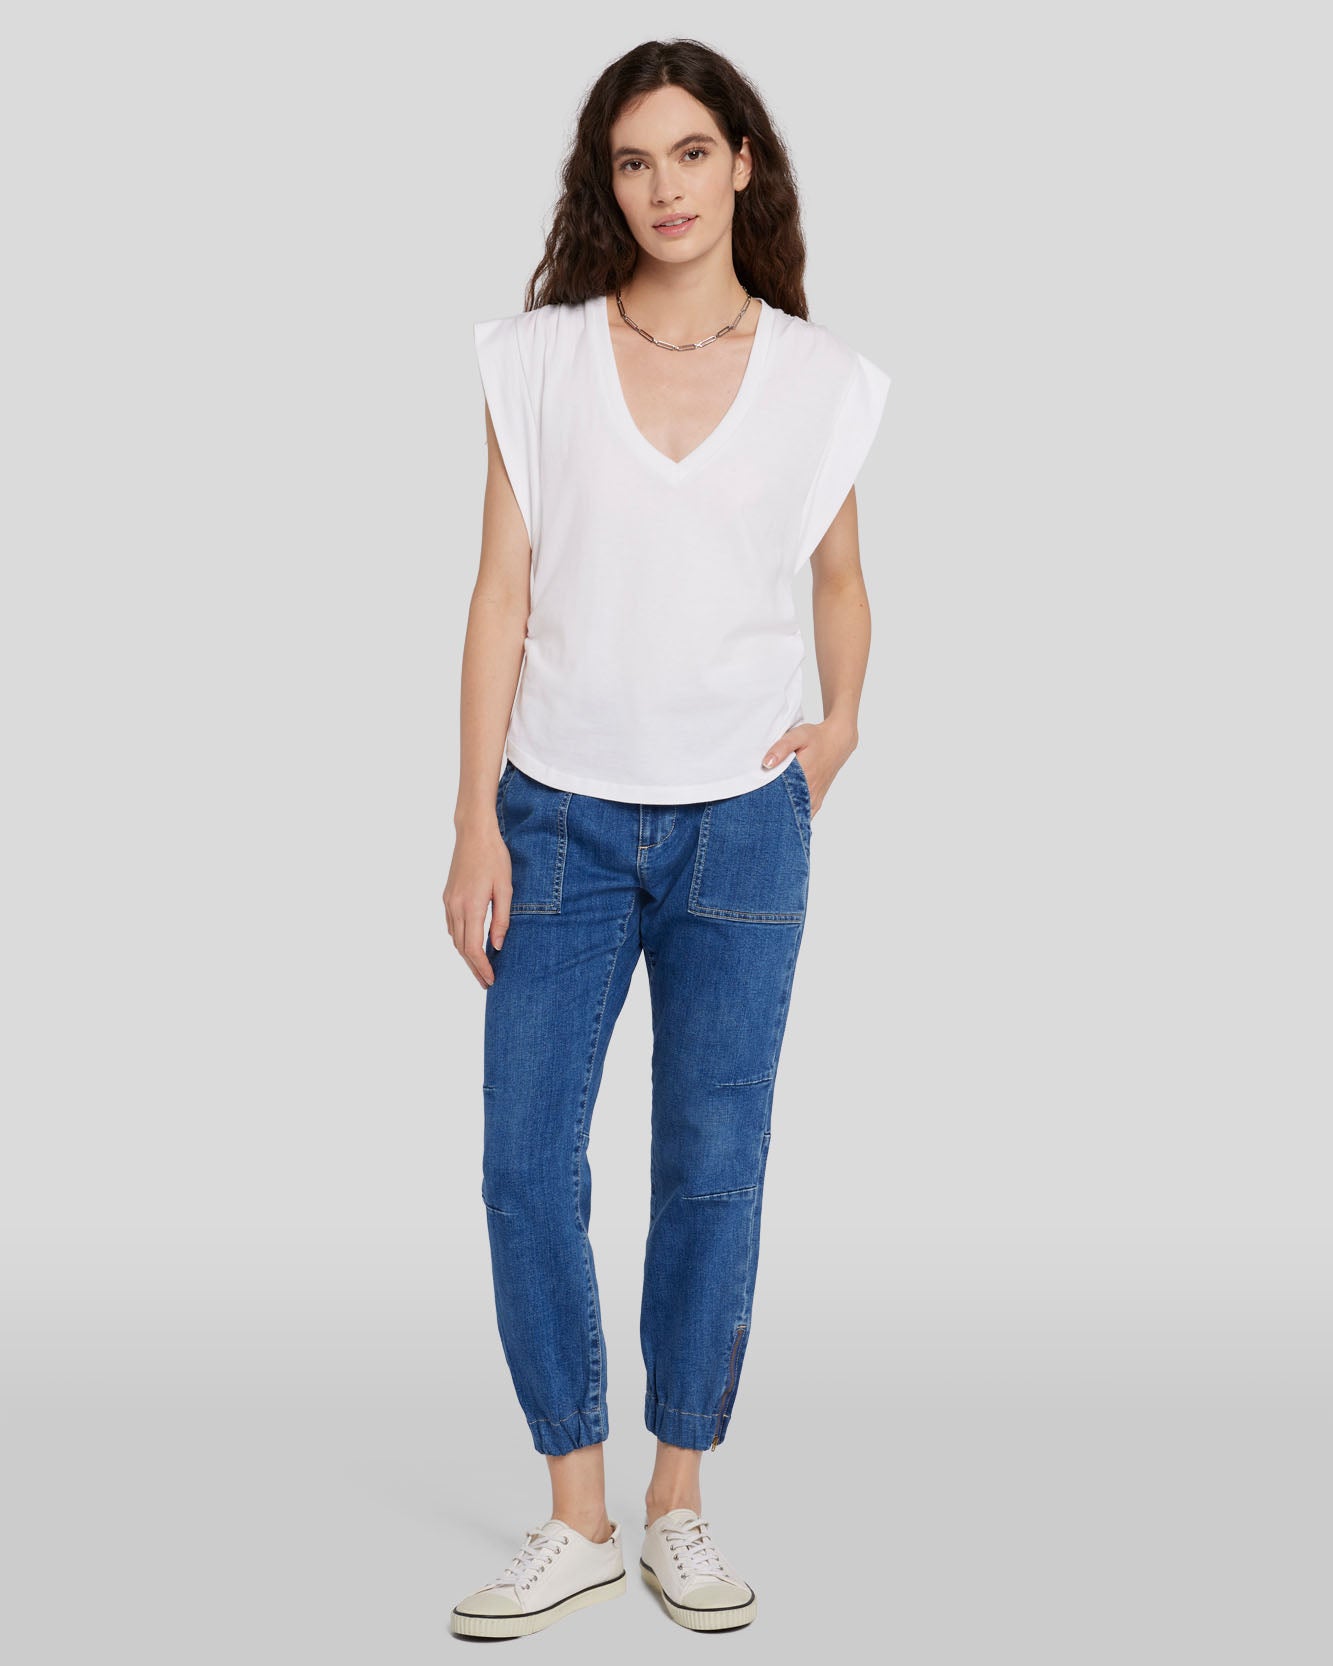 Women's Pants & Jeans: Linen, Corduroy, Denim